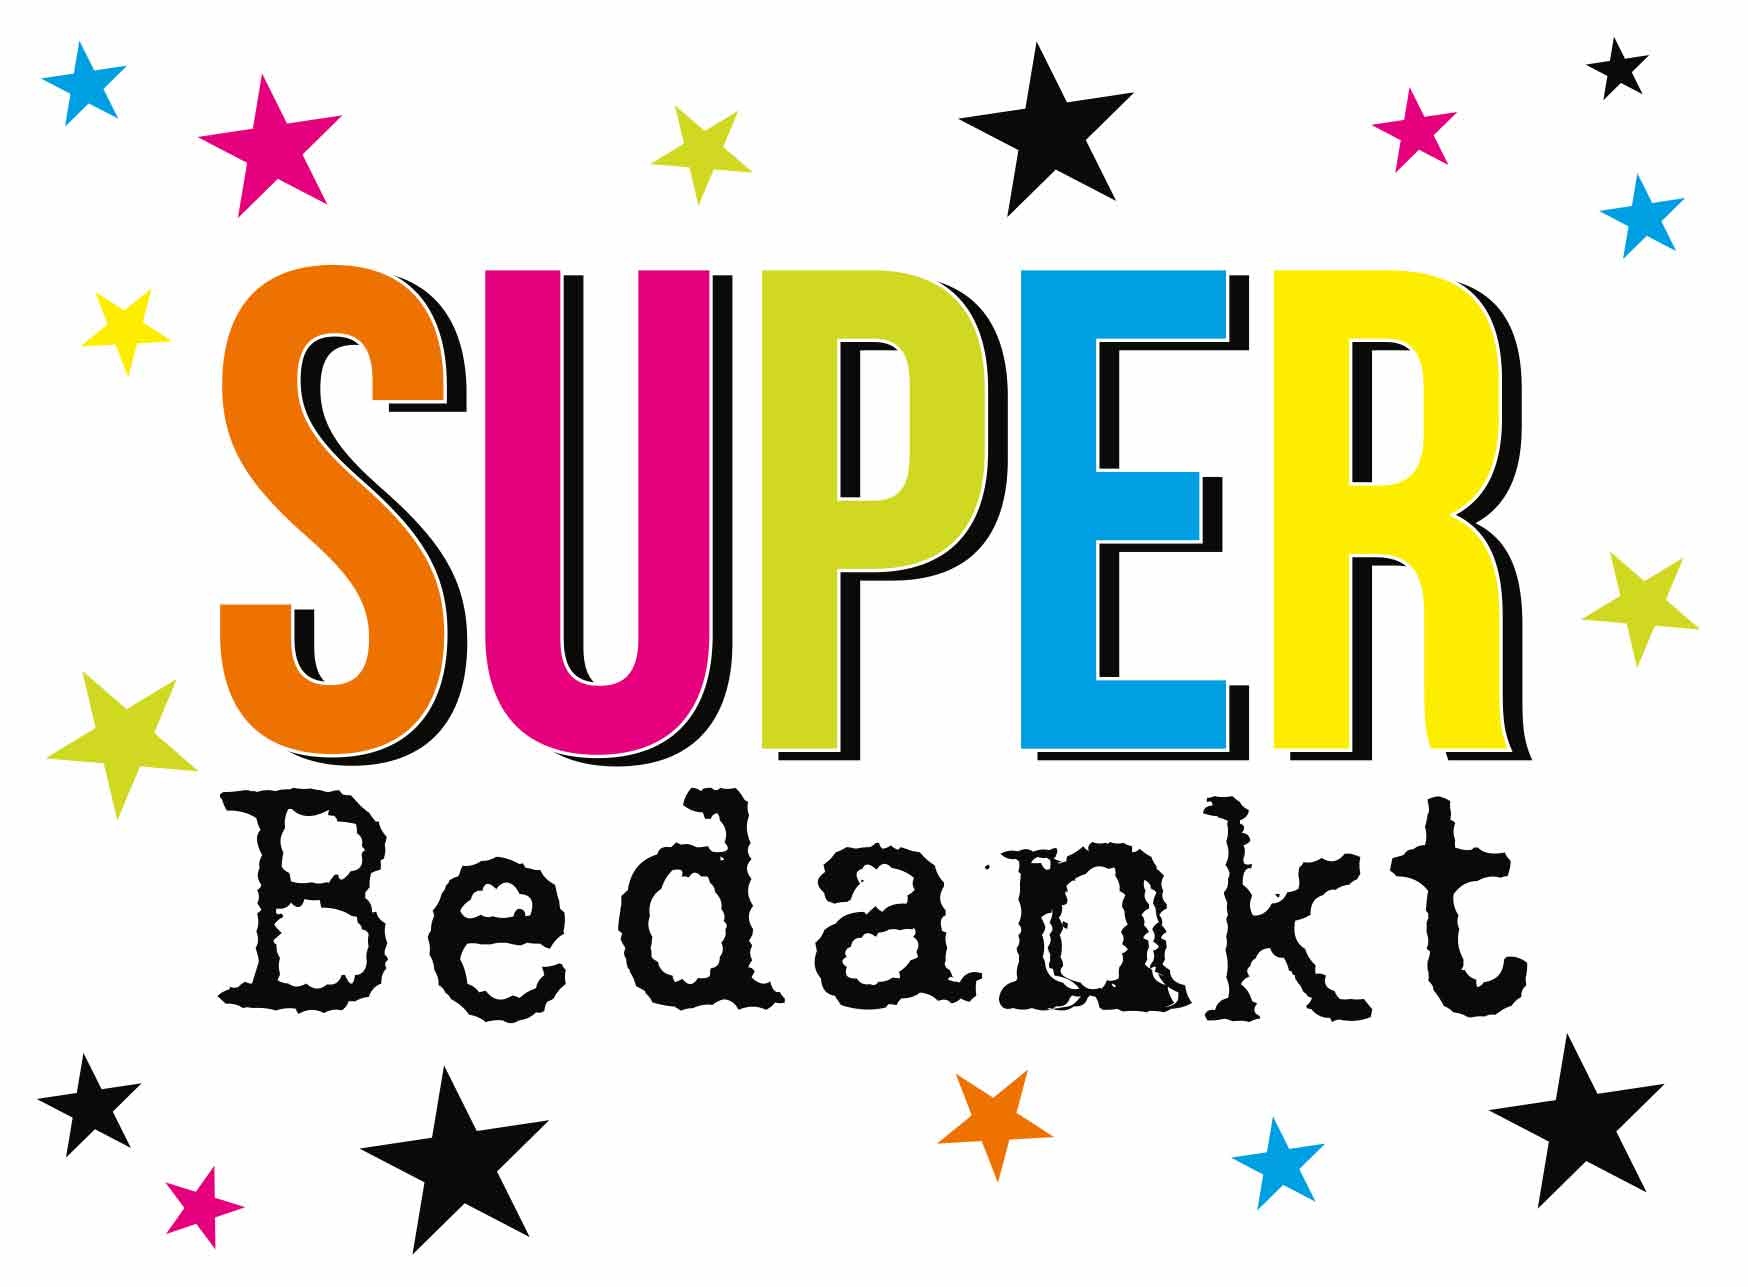 onwettig pop vogel Super bedankt - Snelwenskaart.nl